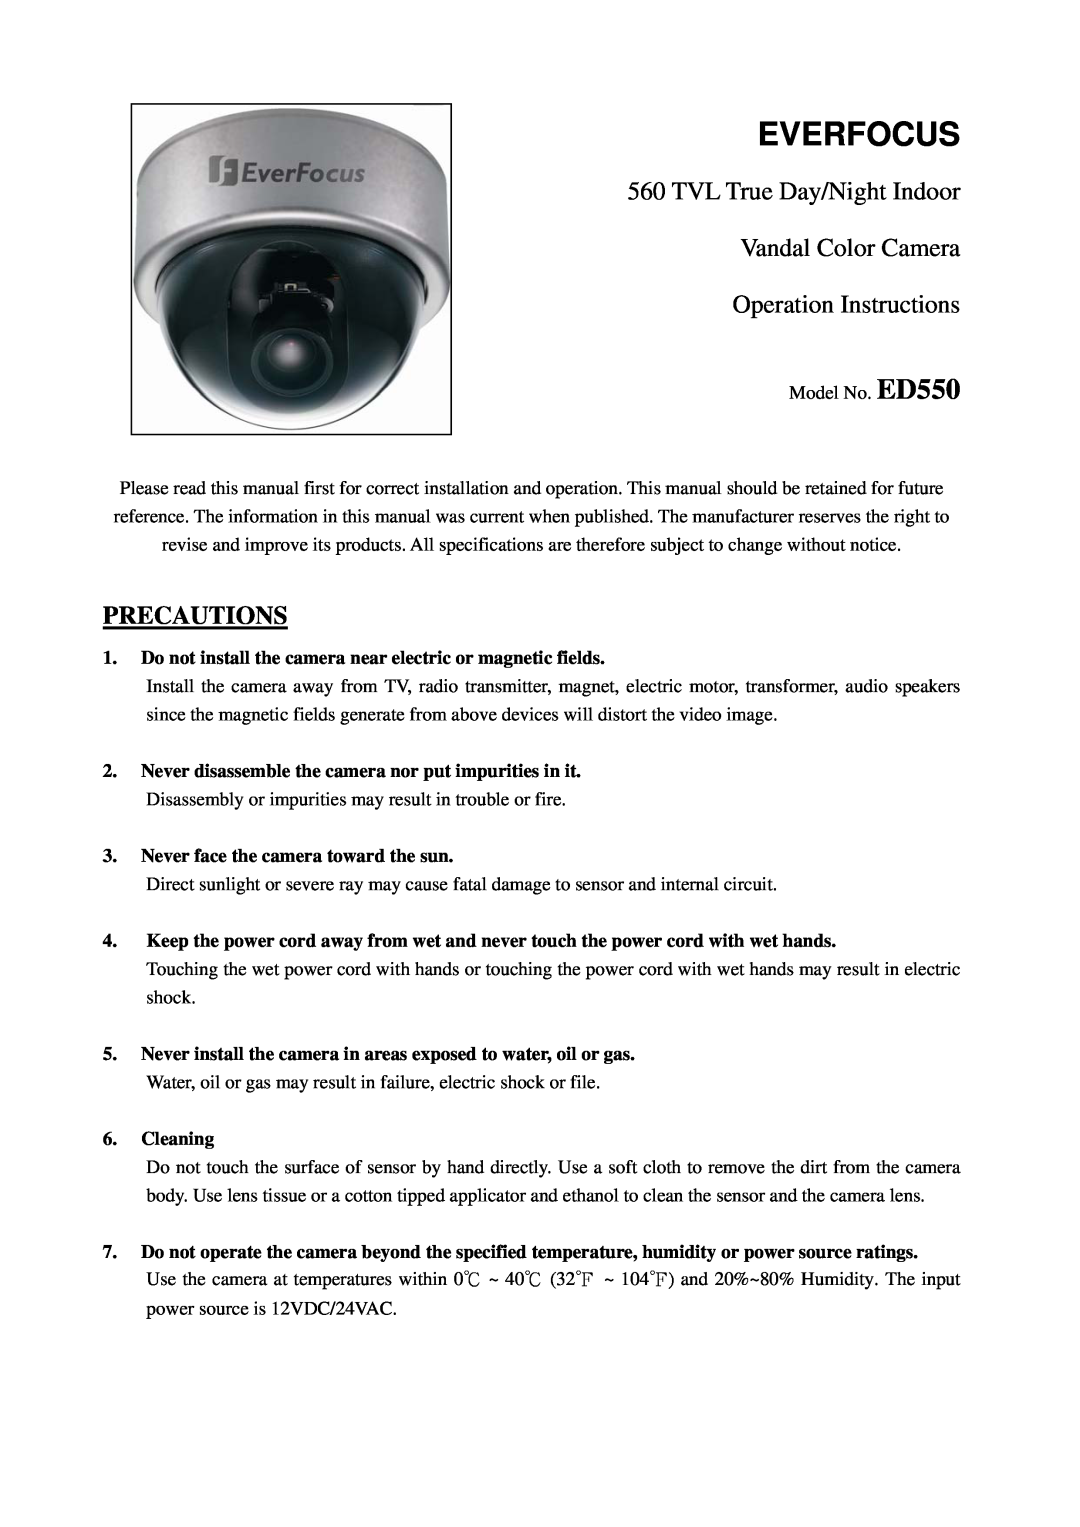 EverFocus ED550 specifications Precautions, Everfocus, TVL True Day/Night Indoor Vandal Color Camera 